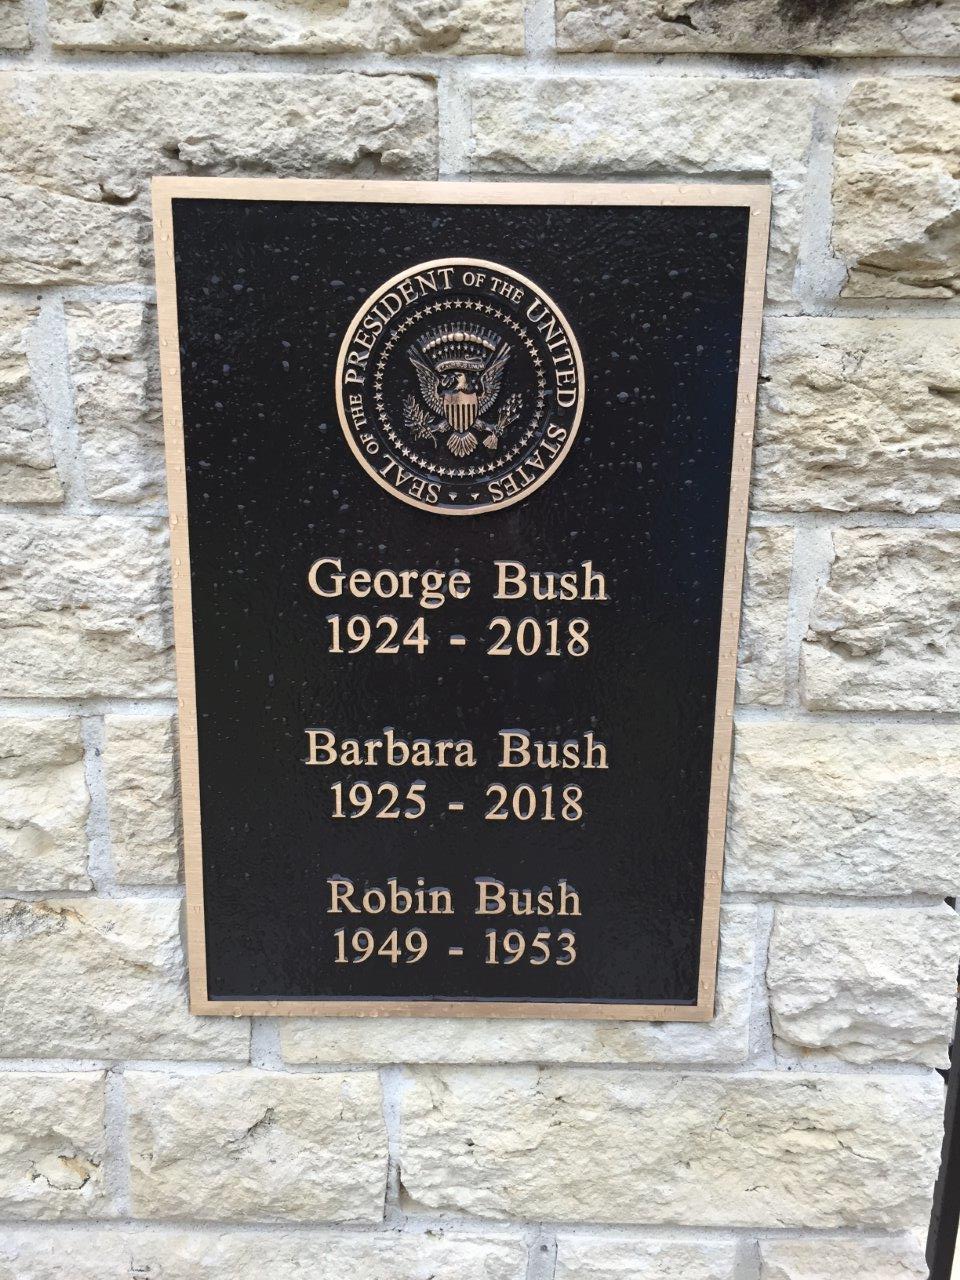 George Bush grave stone